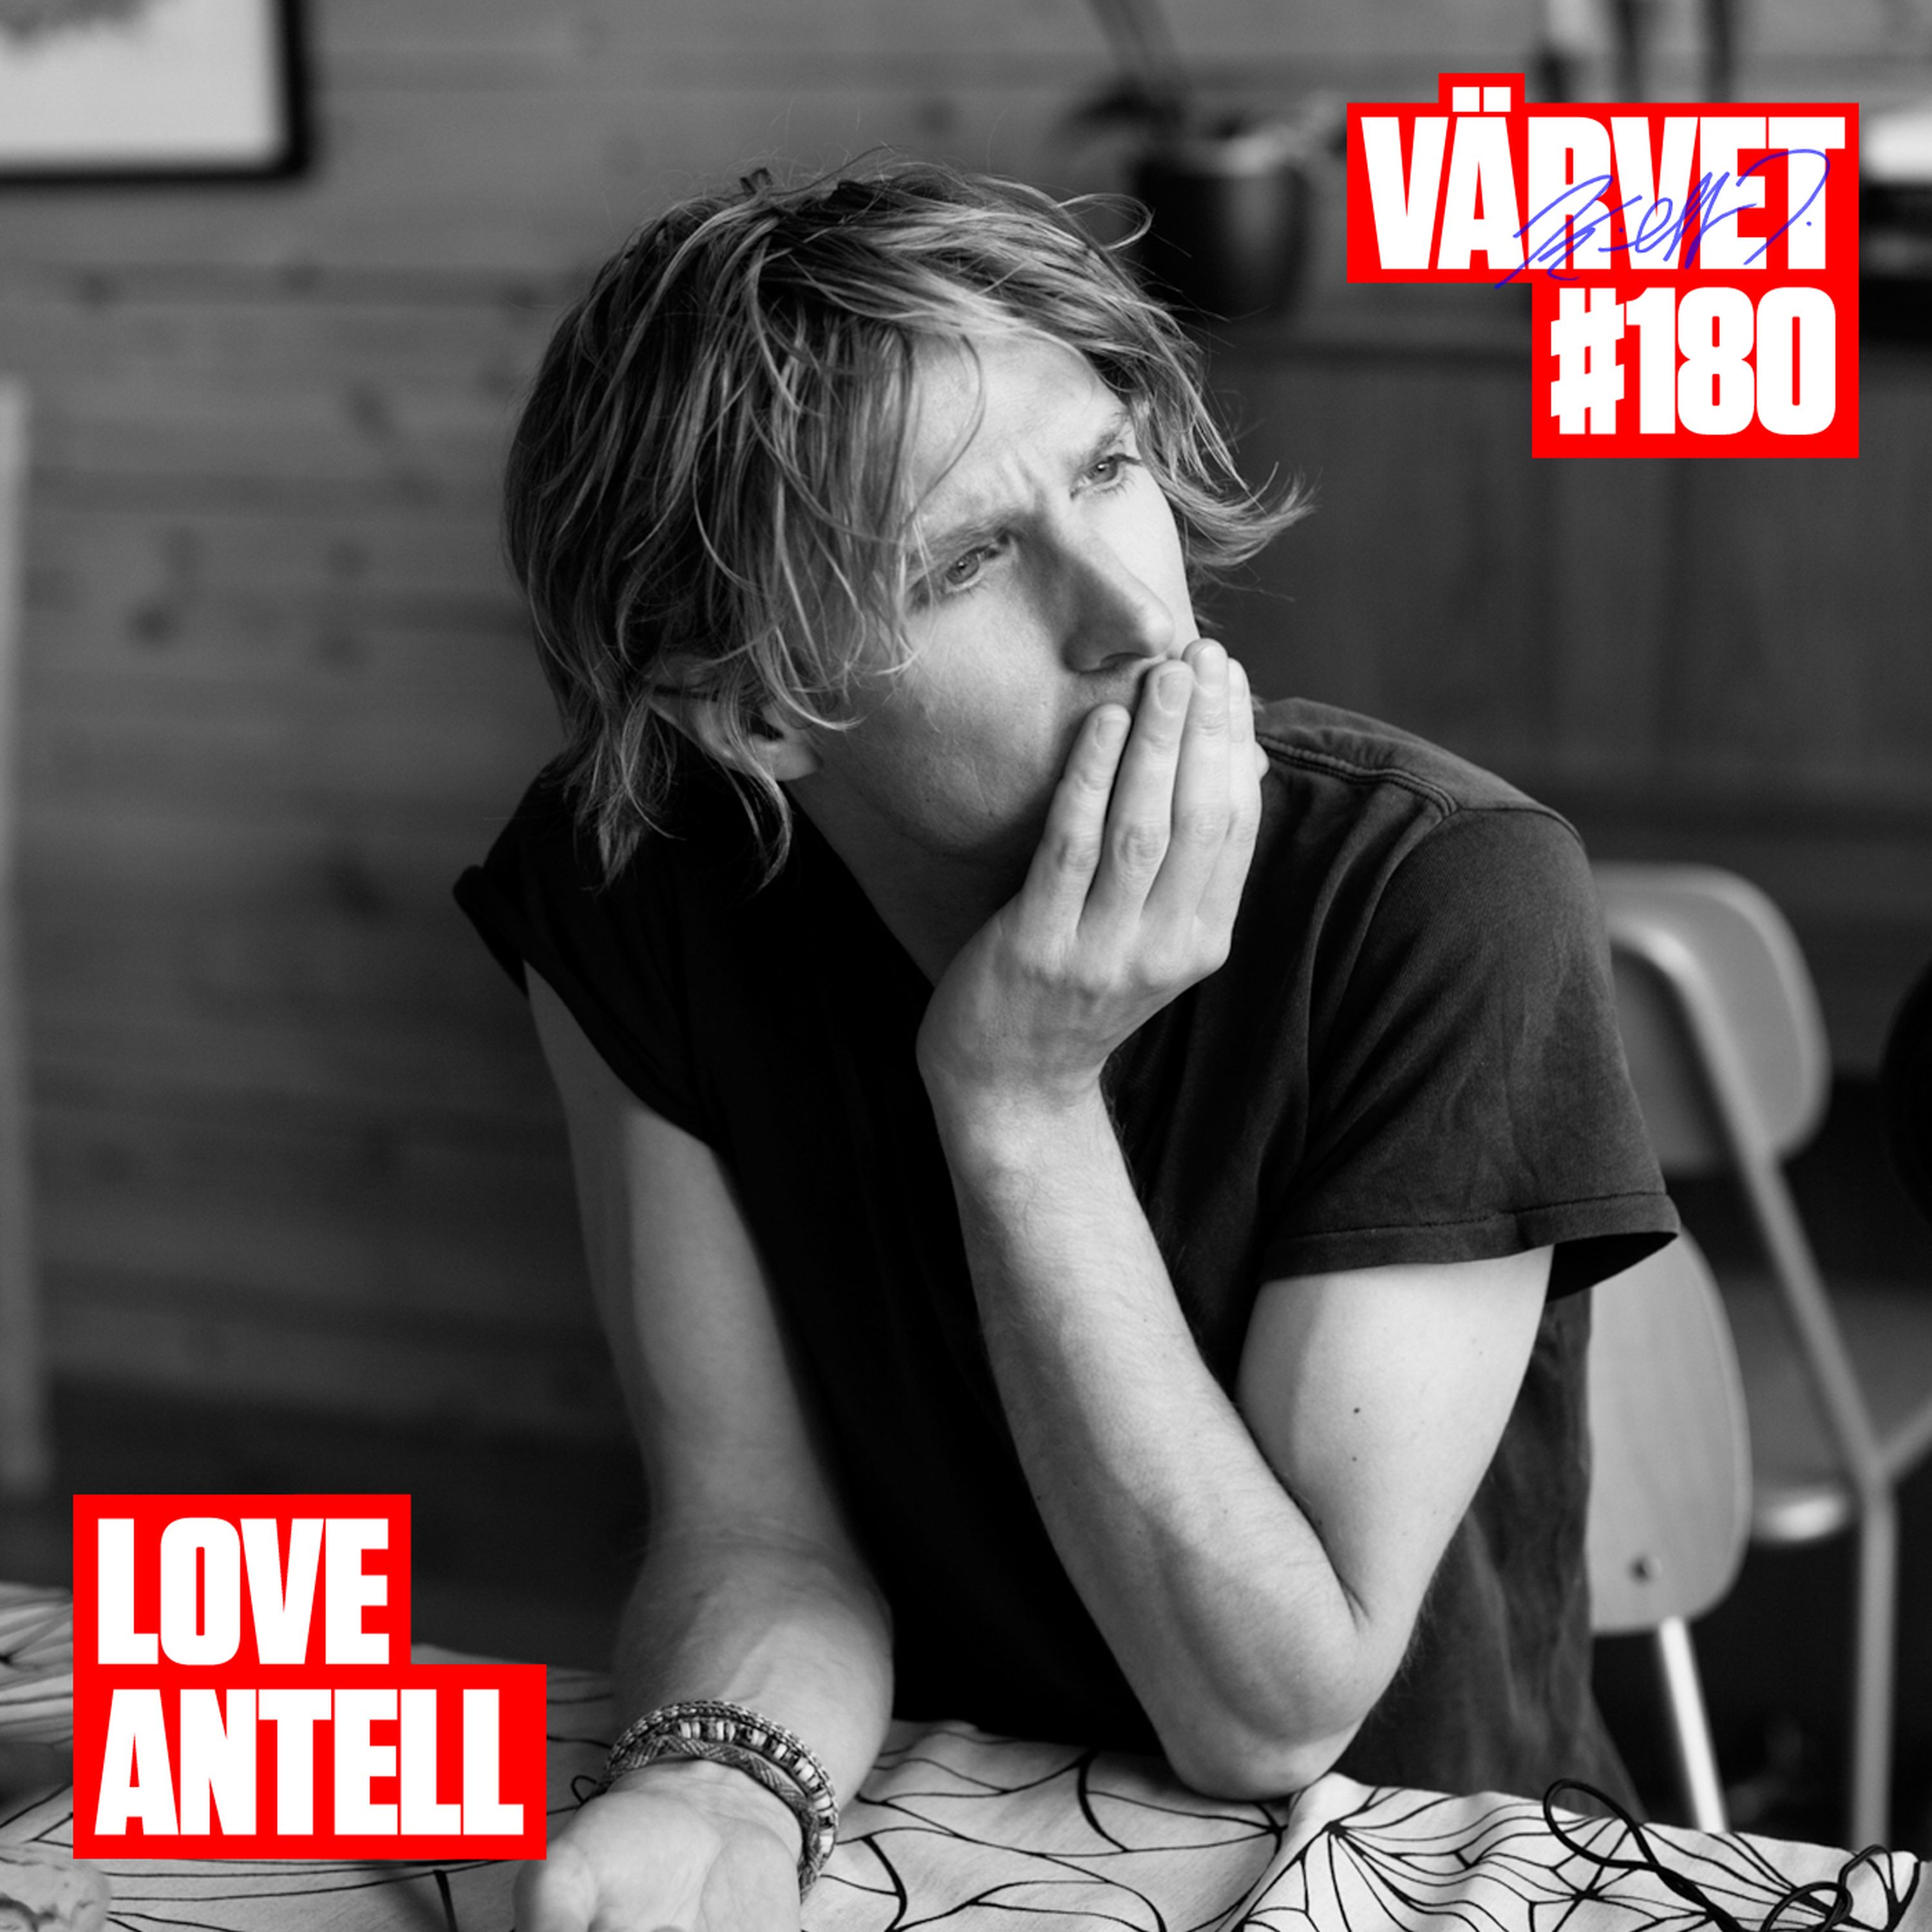 #180: Love Antell